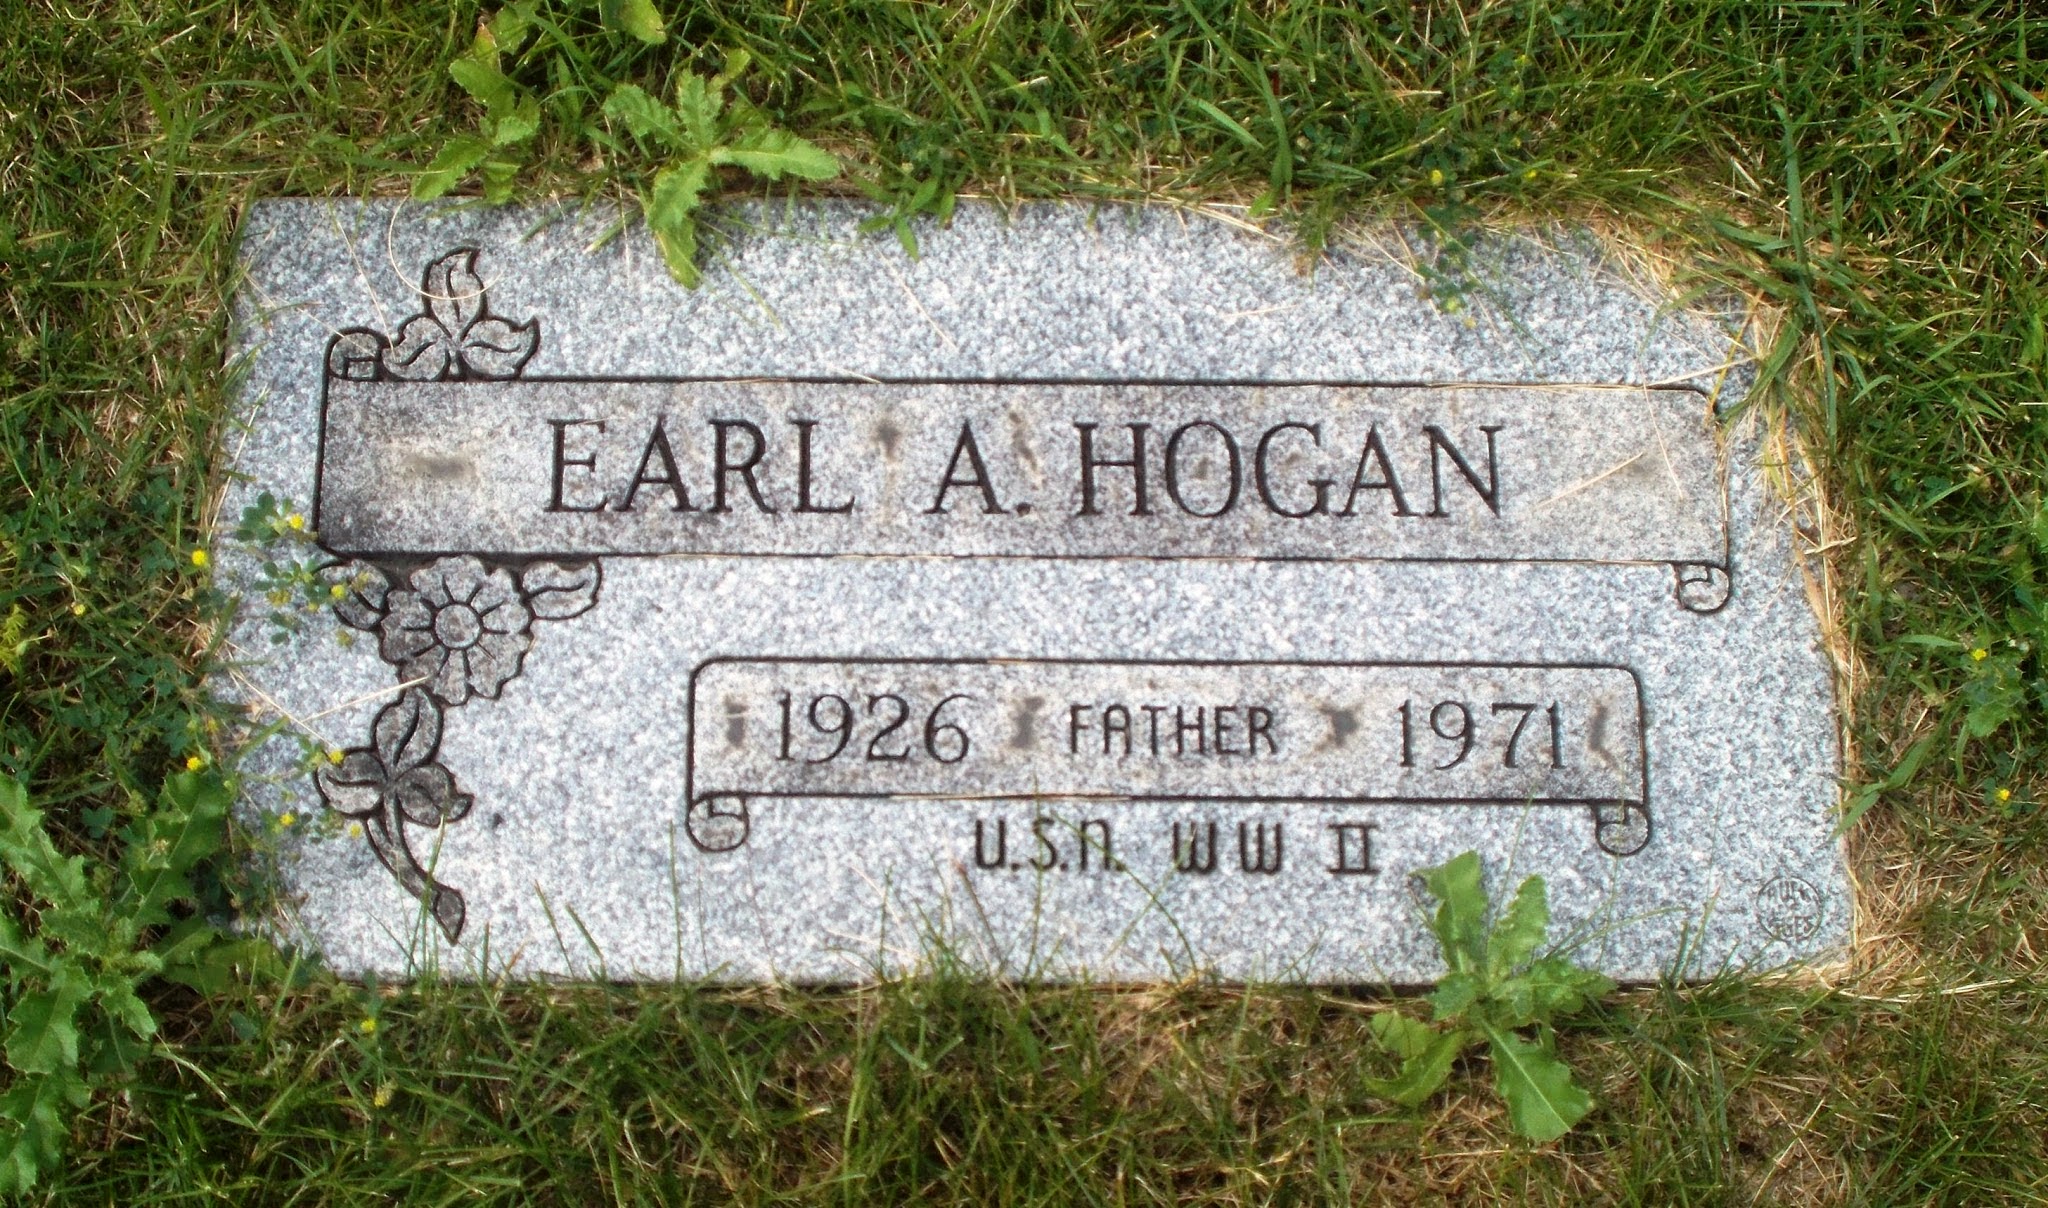 Earl A Hogan